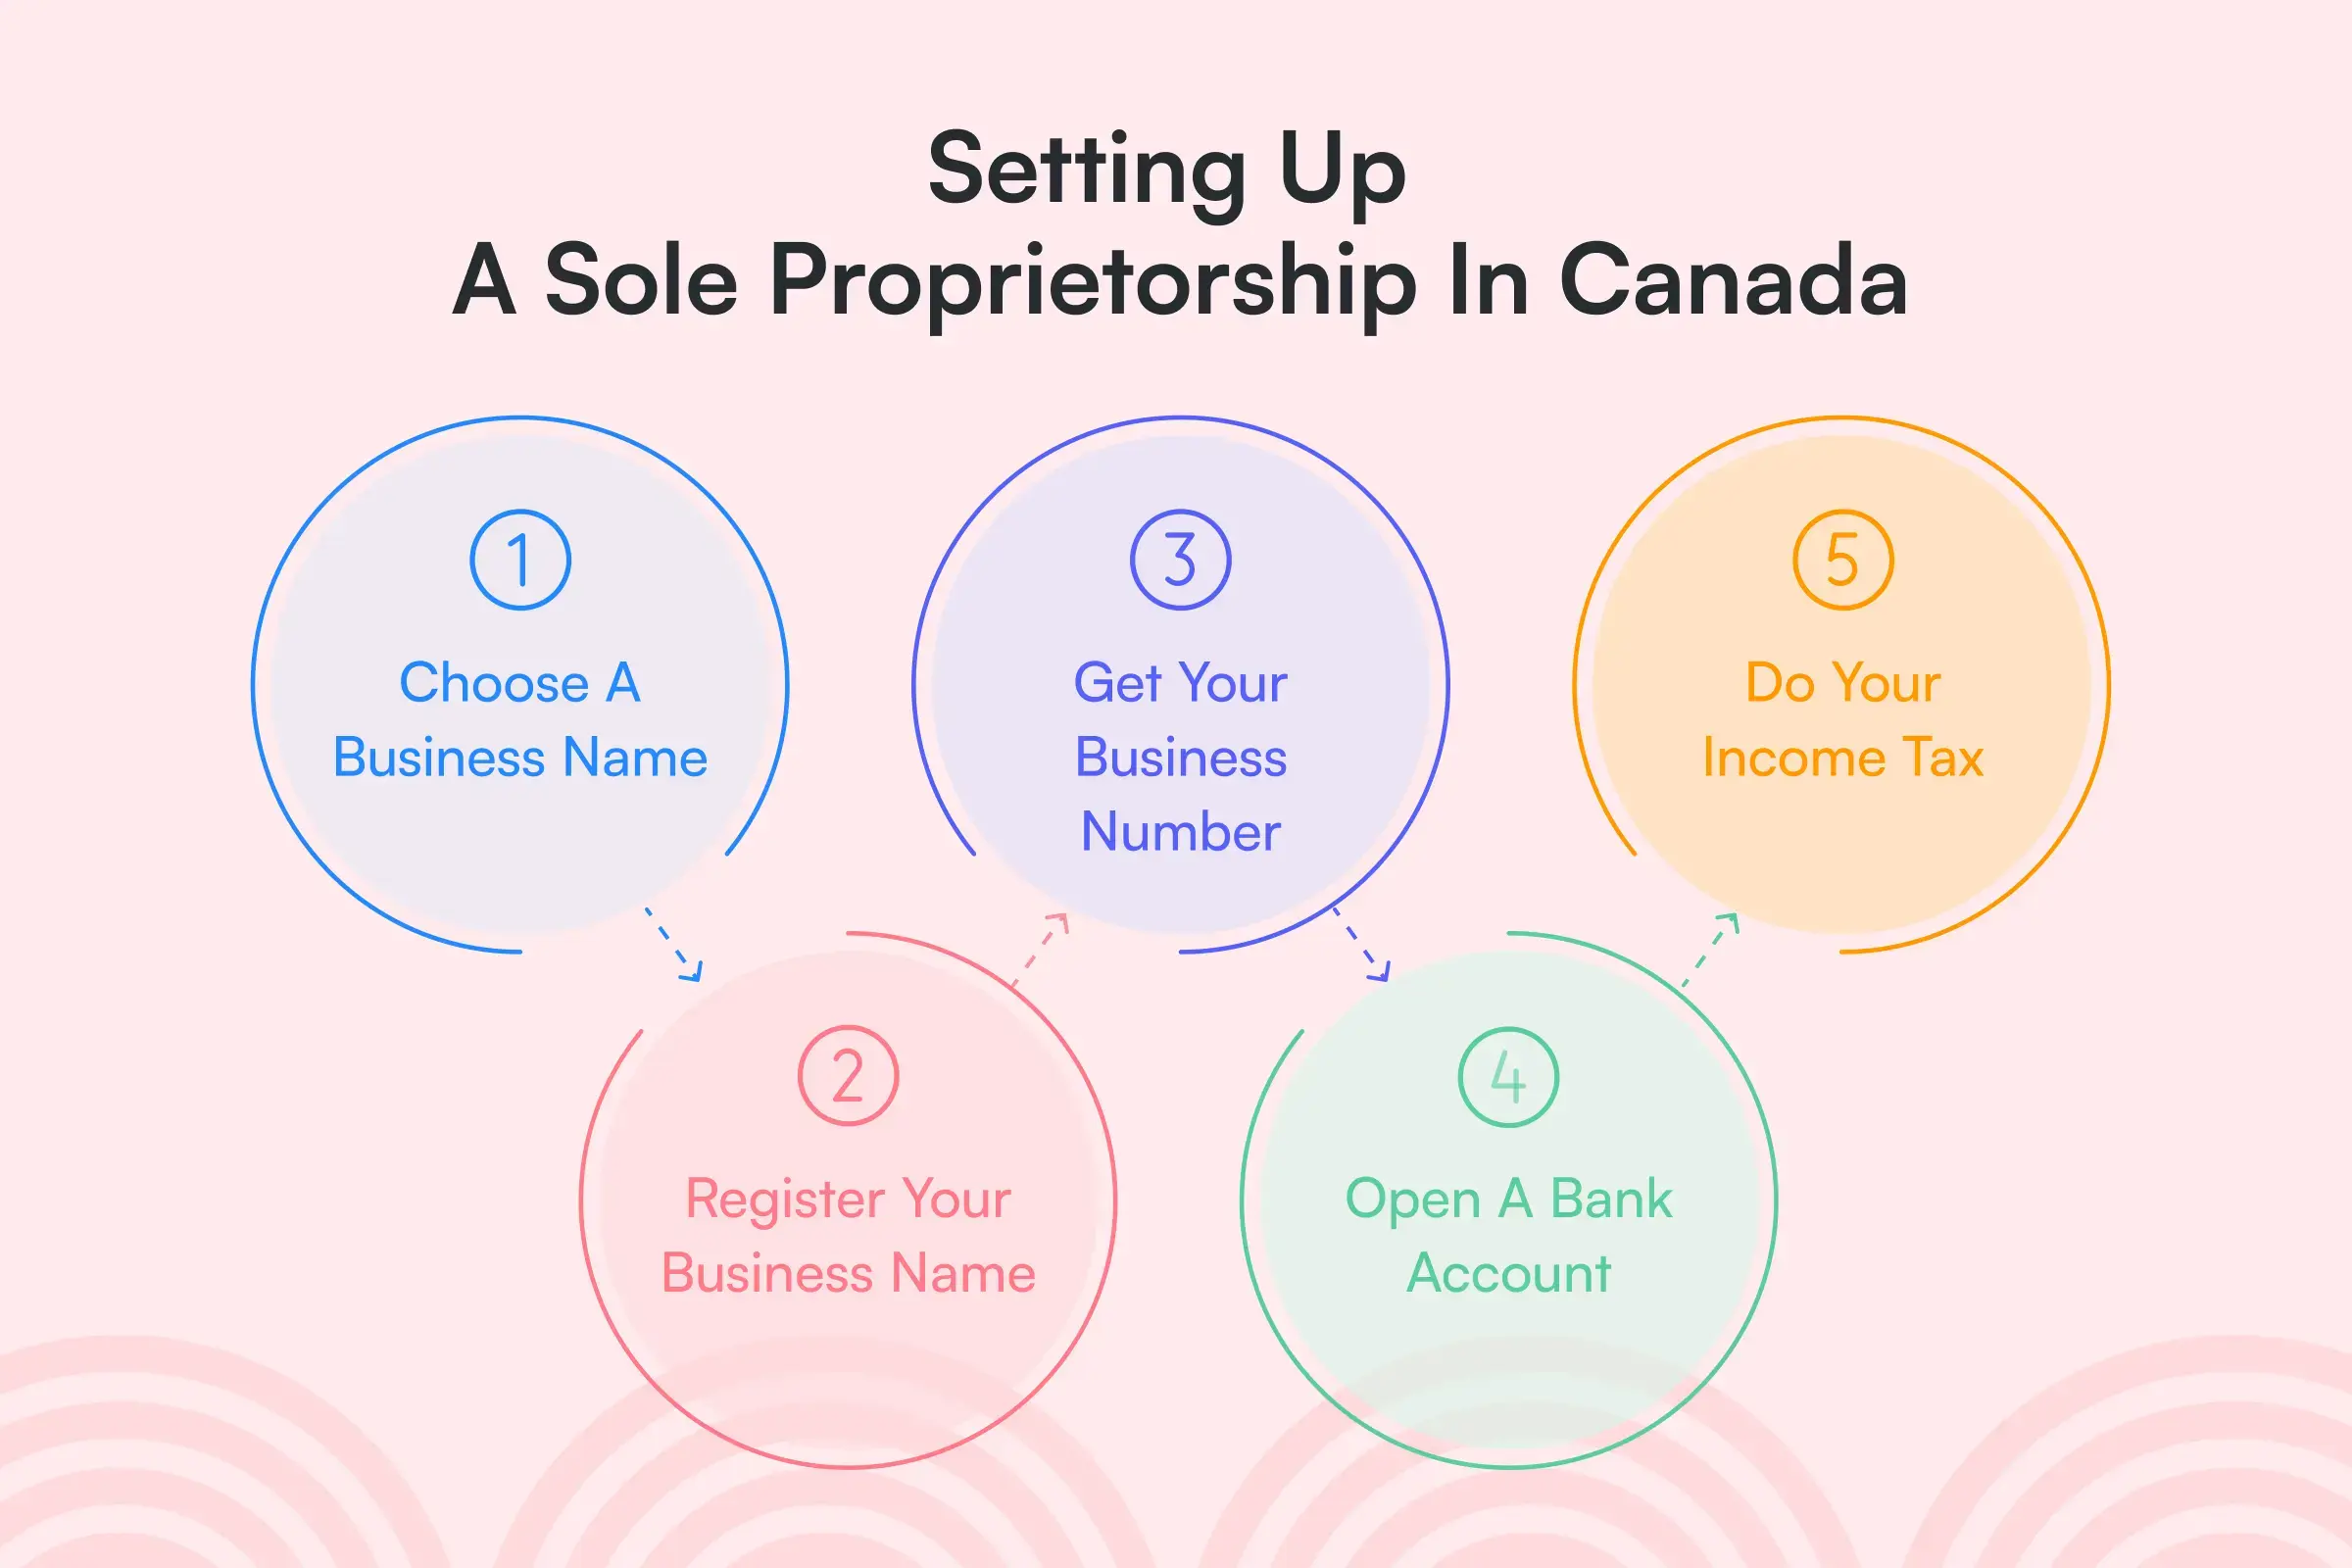 Setting up a sole proprietorship in Canada